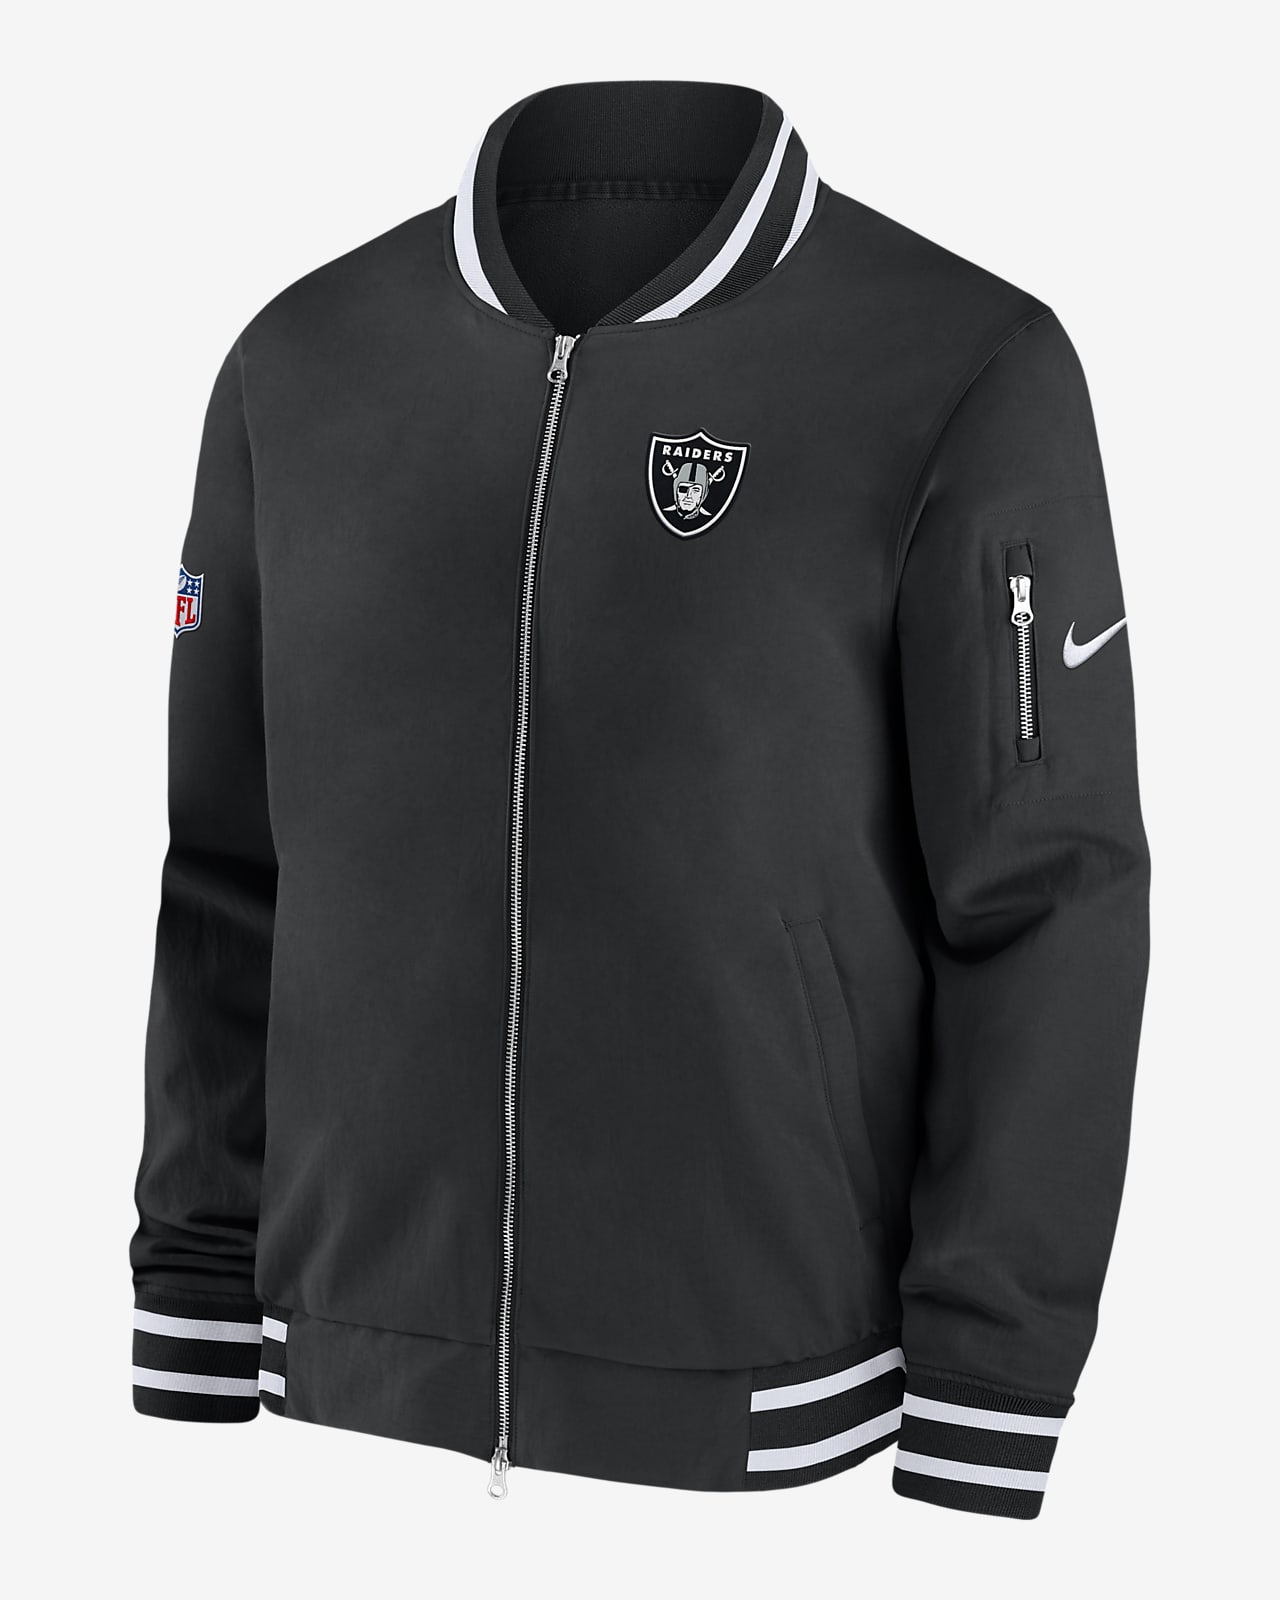 Nike Coach (NFL Las Vegas Raiders) Men's Full-Zip Bomber Jacket